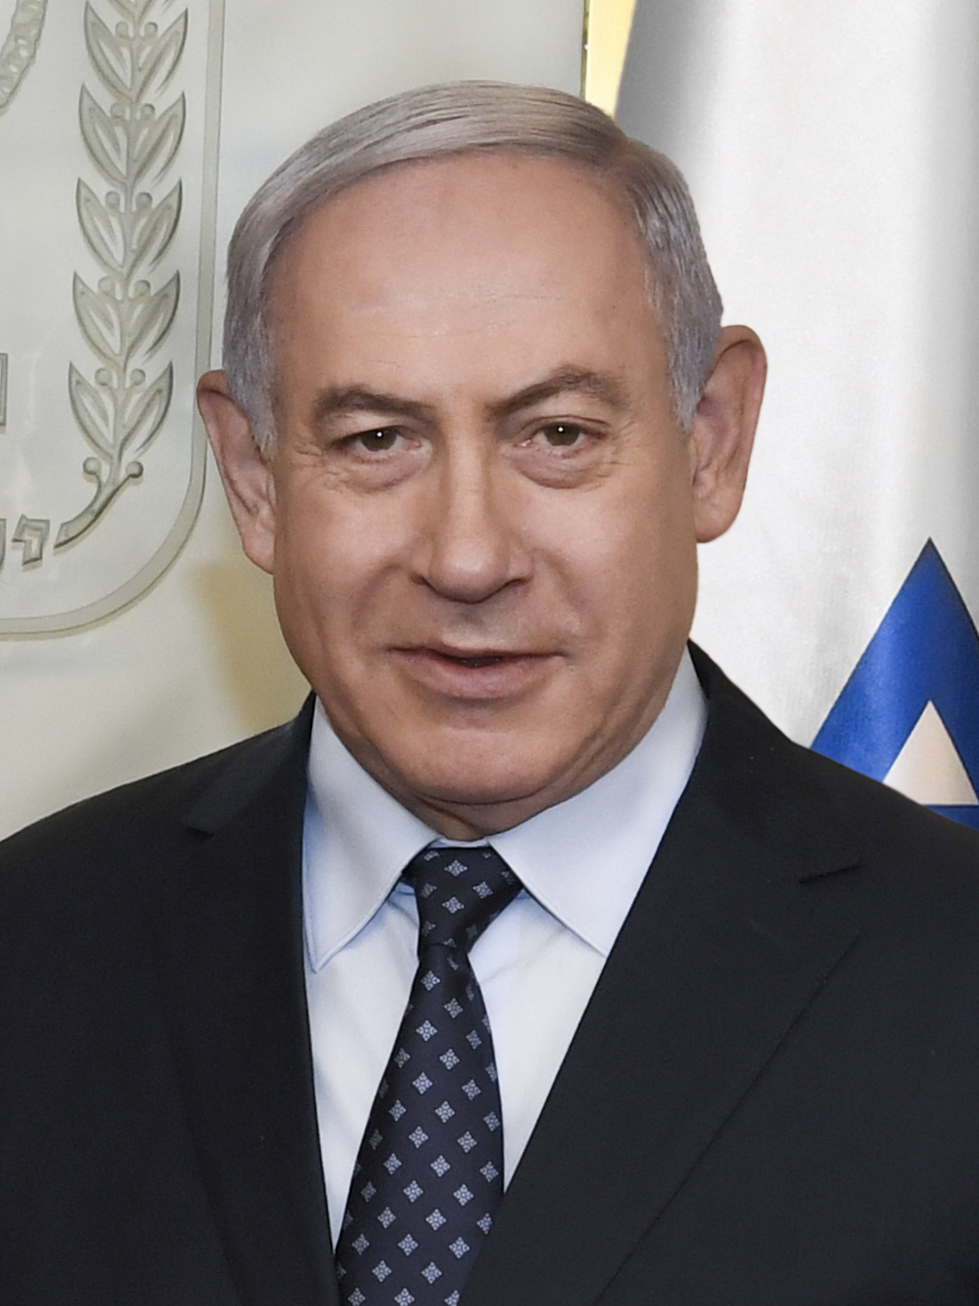 Netanyahu.png